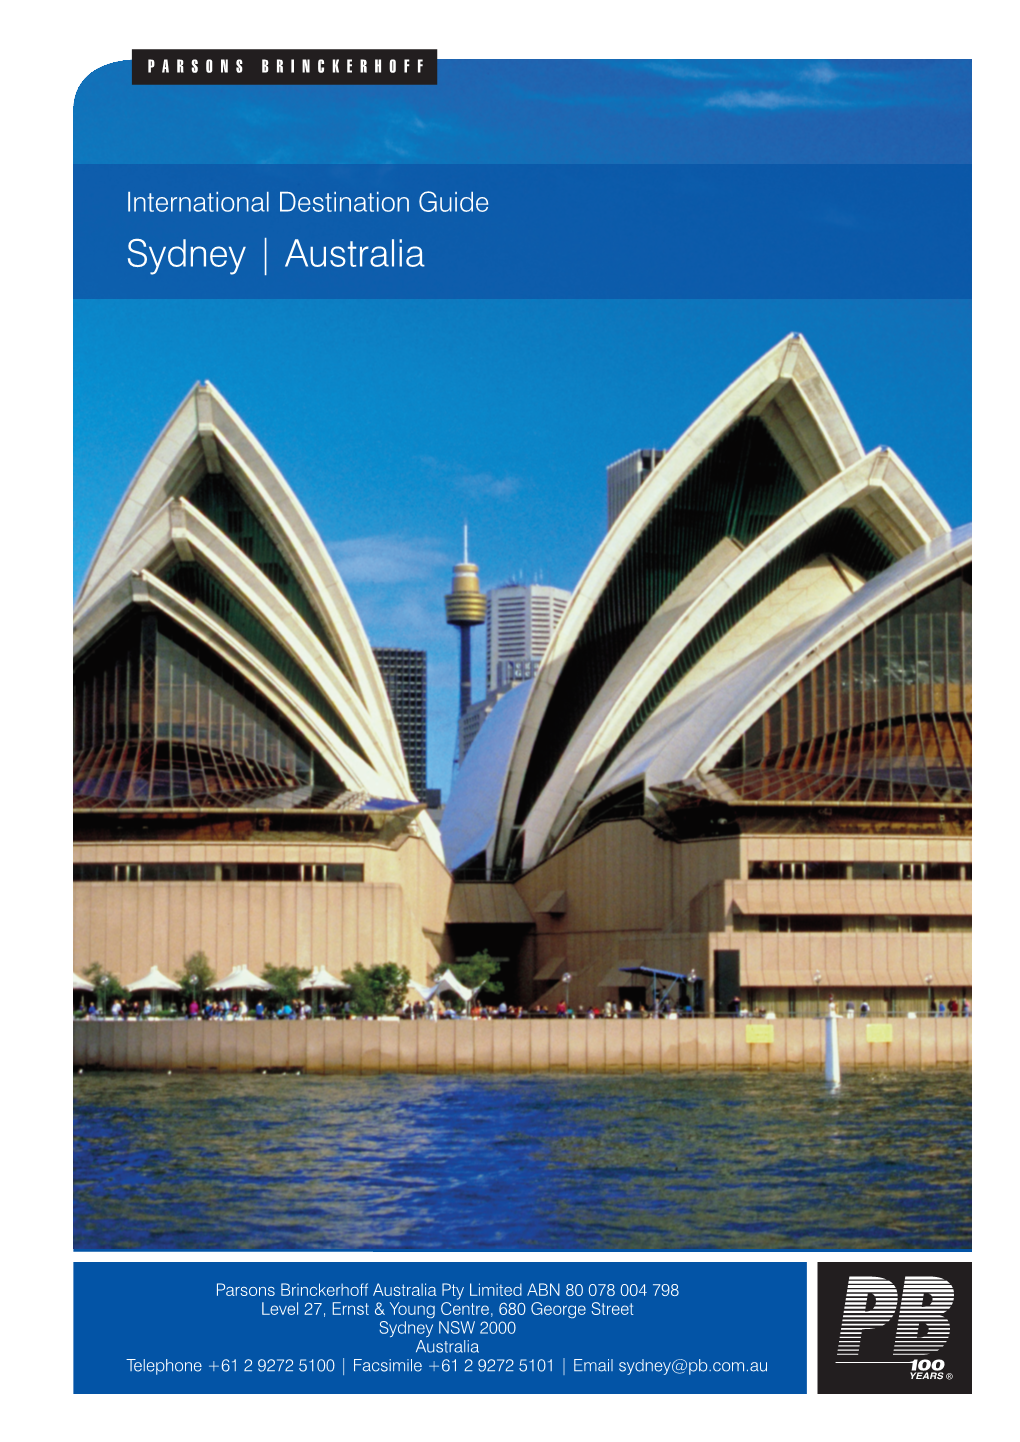 International Destination Guide Sydney | Australia